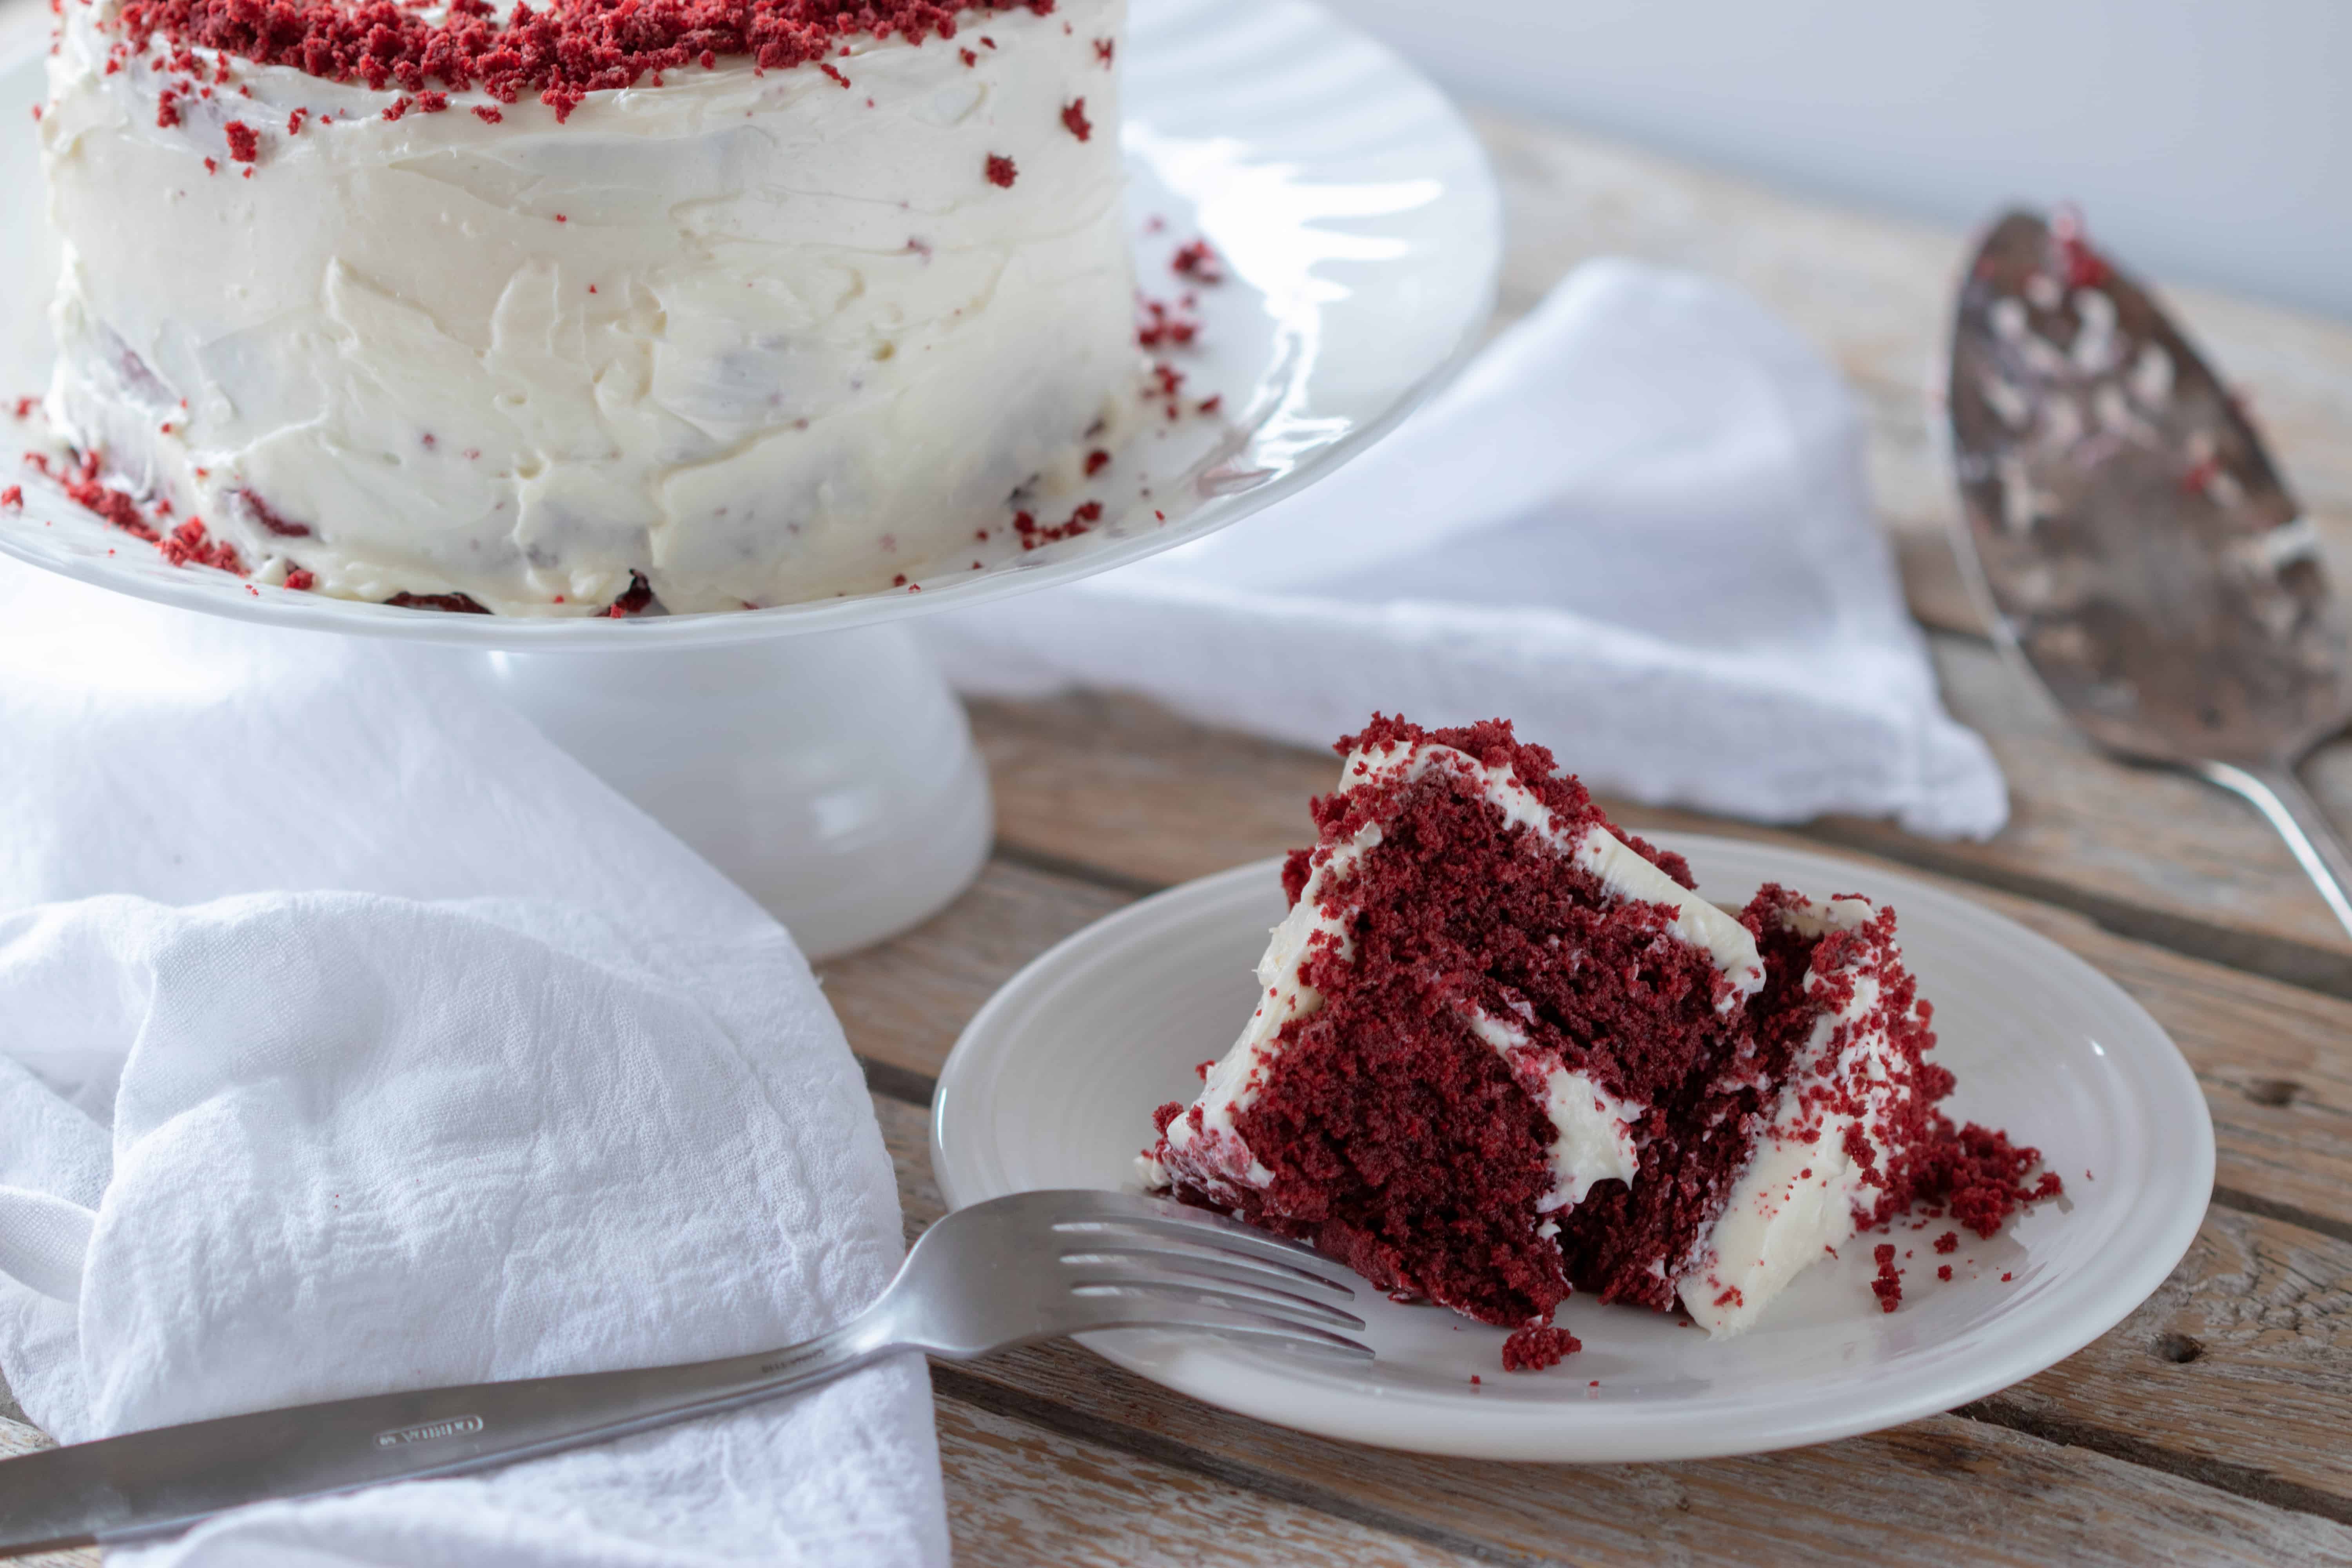 How to Make Sugar Free Red Velvet Cake - Keto Friendly Cake!